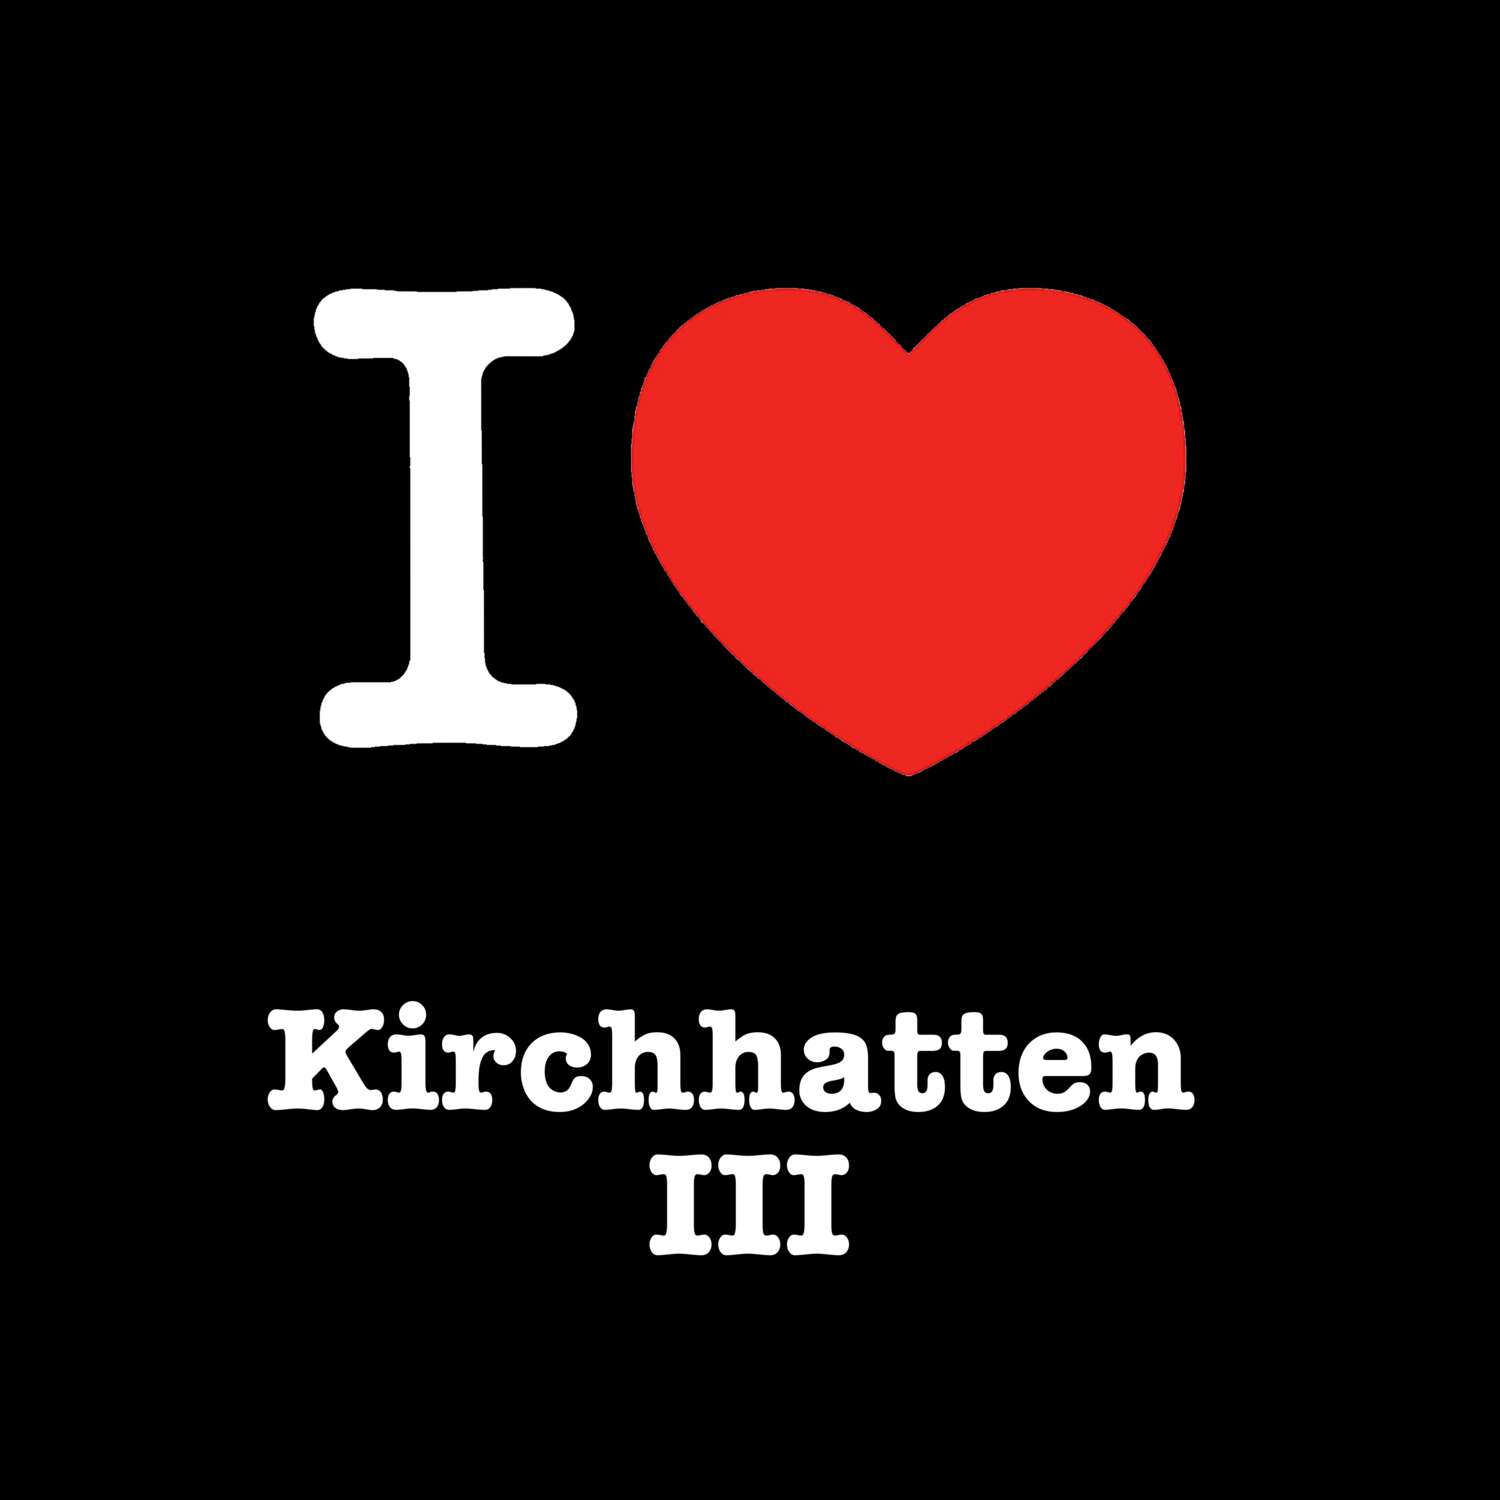 Kirchhatten III T-Shirt »I love«